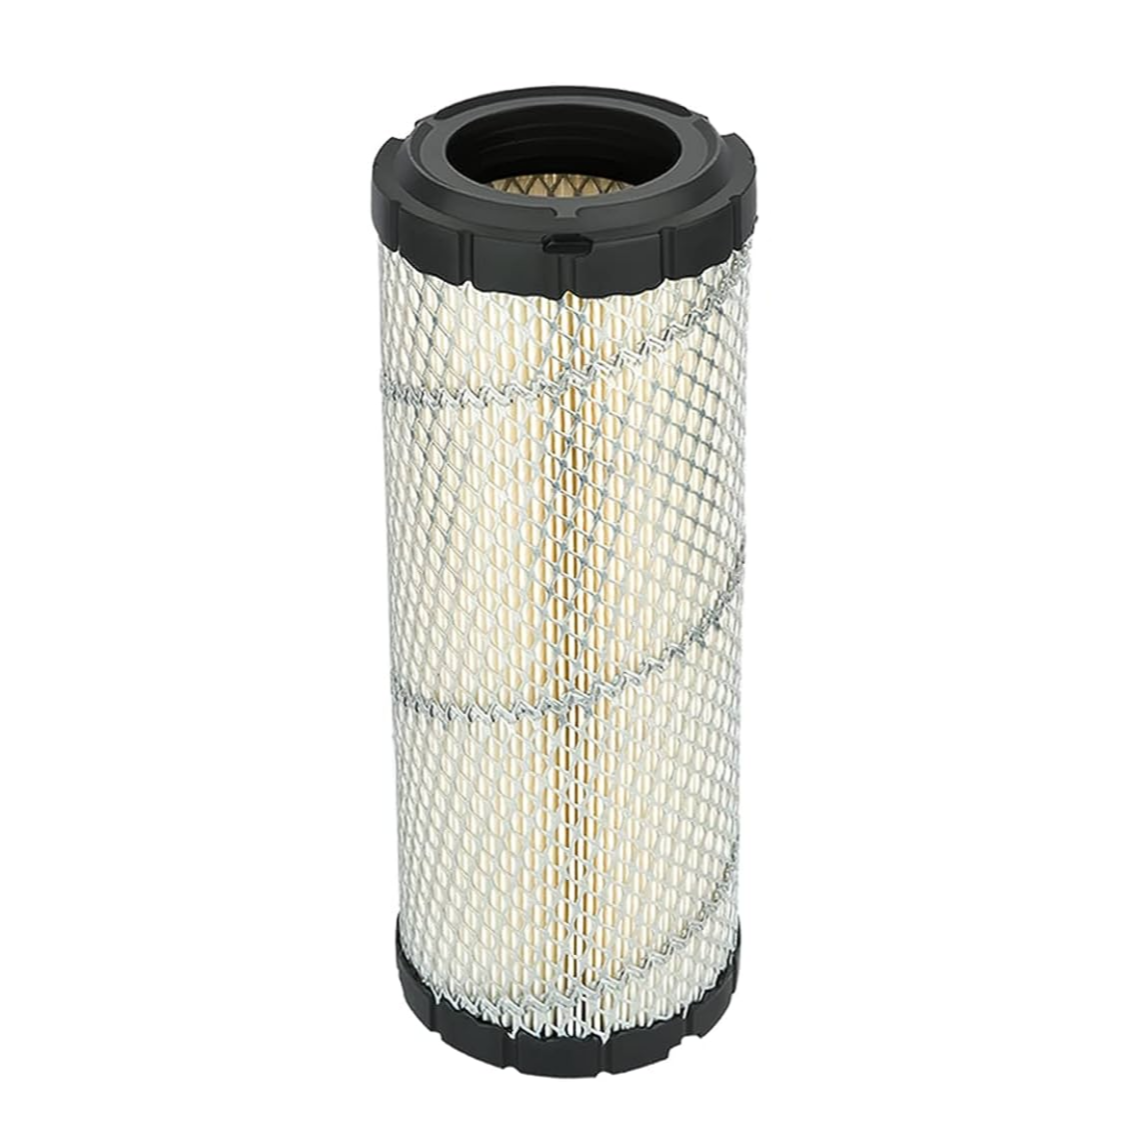 Briggs & Stratton/Kohler/Kawasaki Donaldson Outer Filter-A/C Cylinder Cartridge Set of (12) 841497